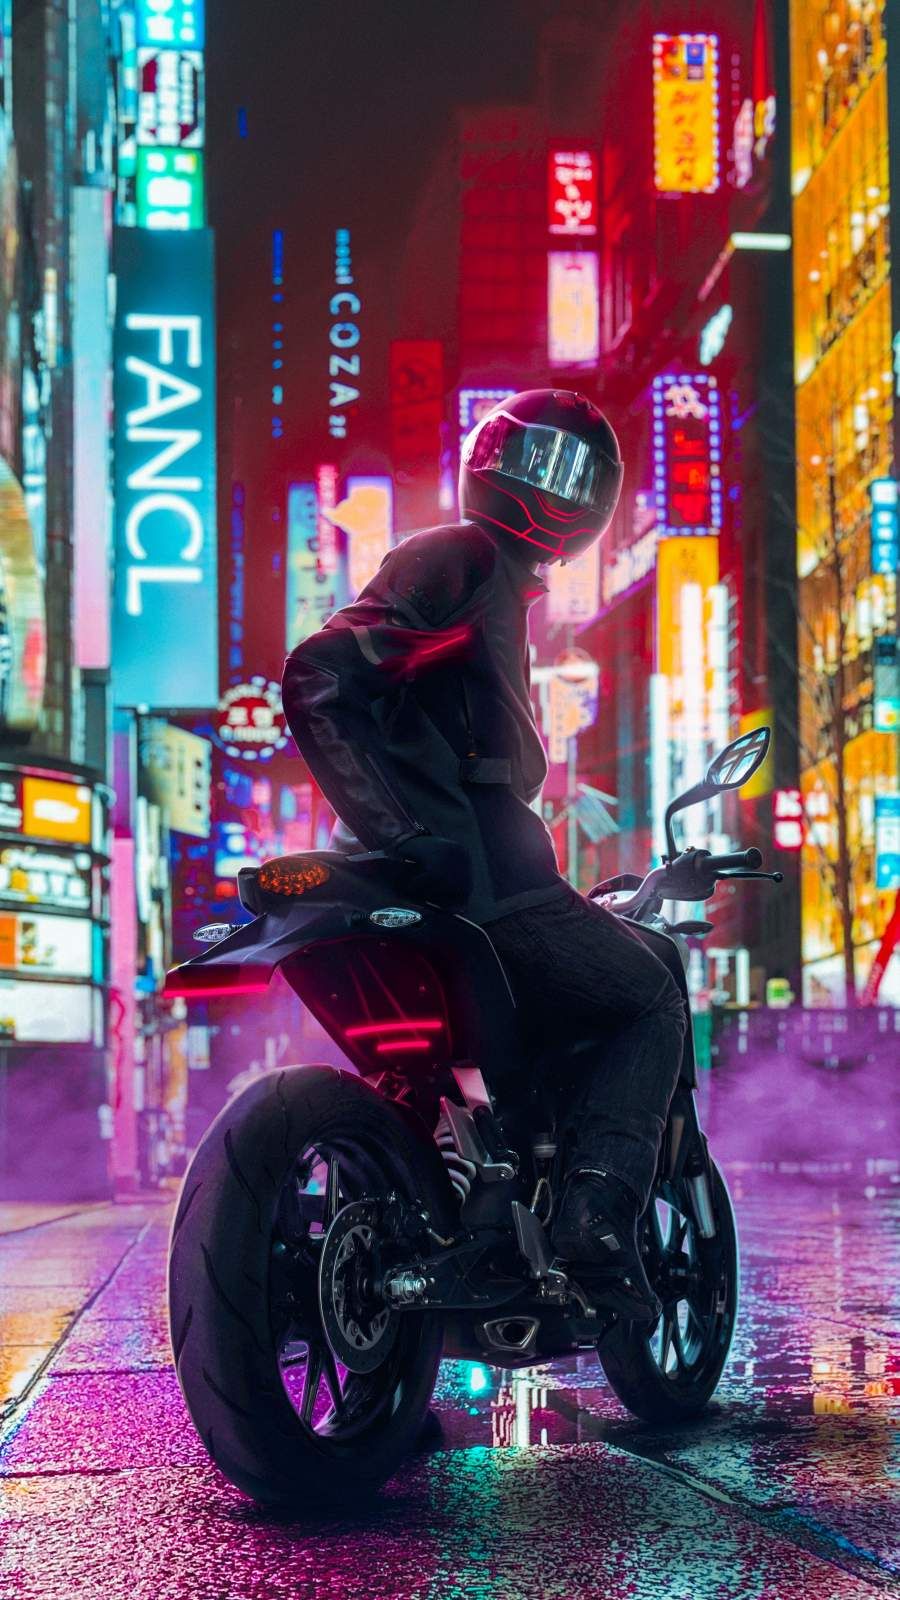 Motorcycle Rider iPhone Wallpaper Pop Art Hipster